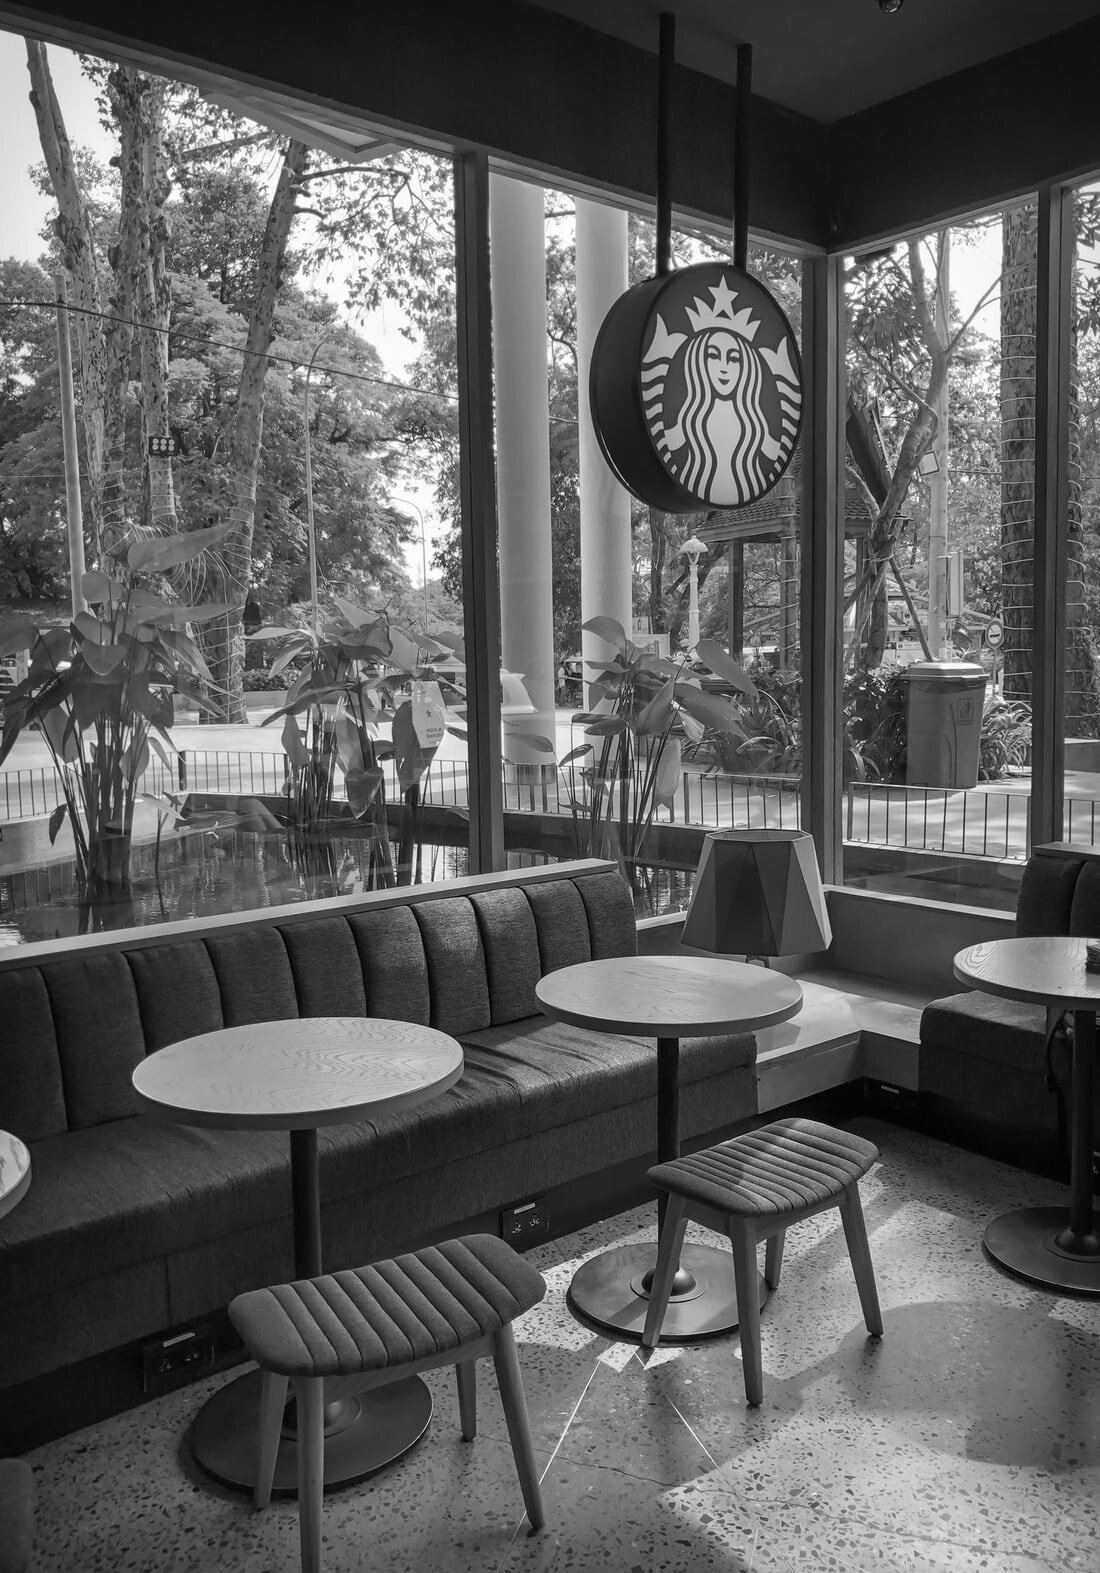 An empty Starbucks cafe. Via Unsplash.